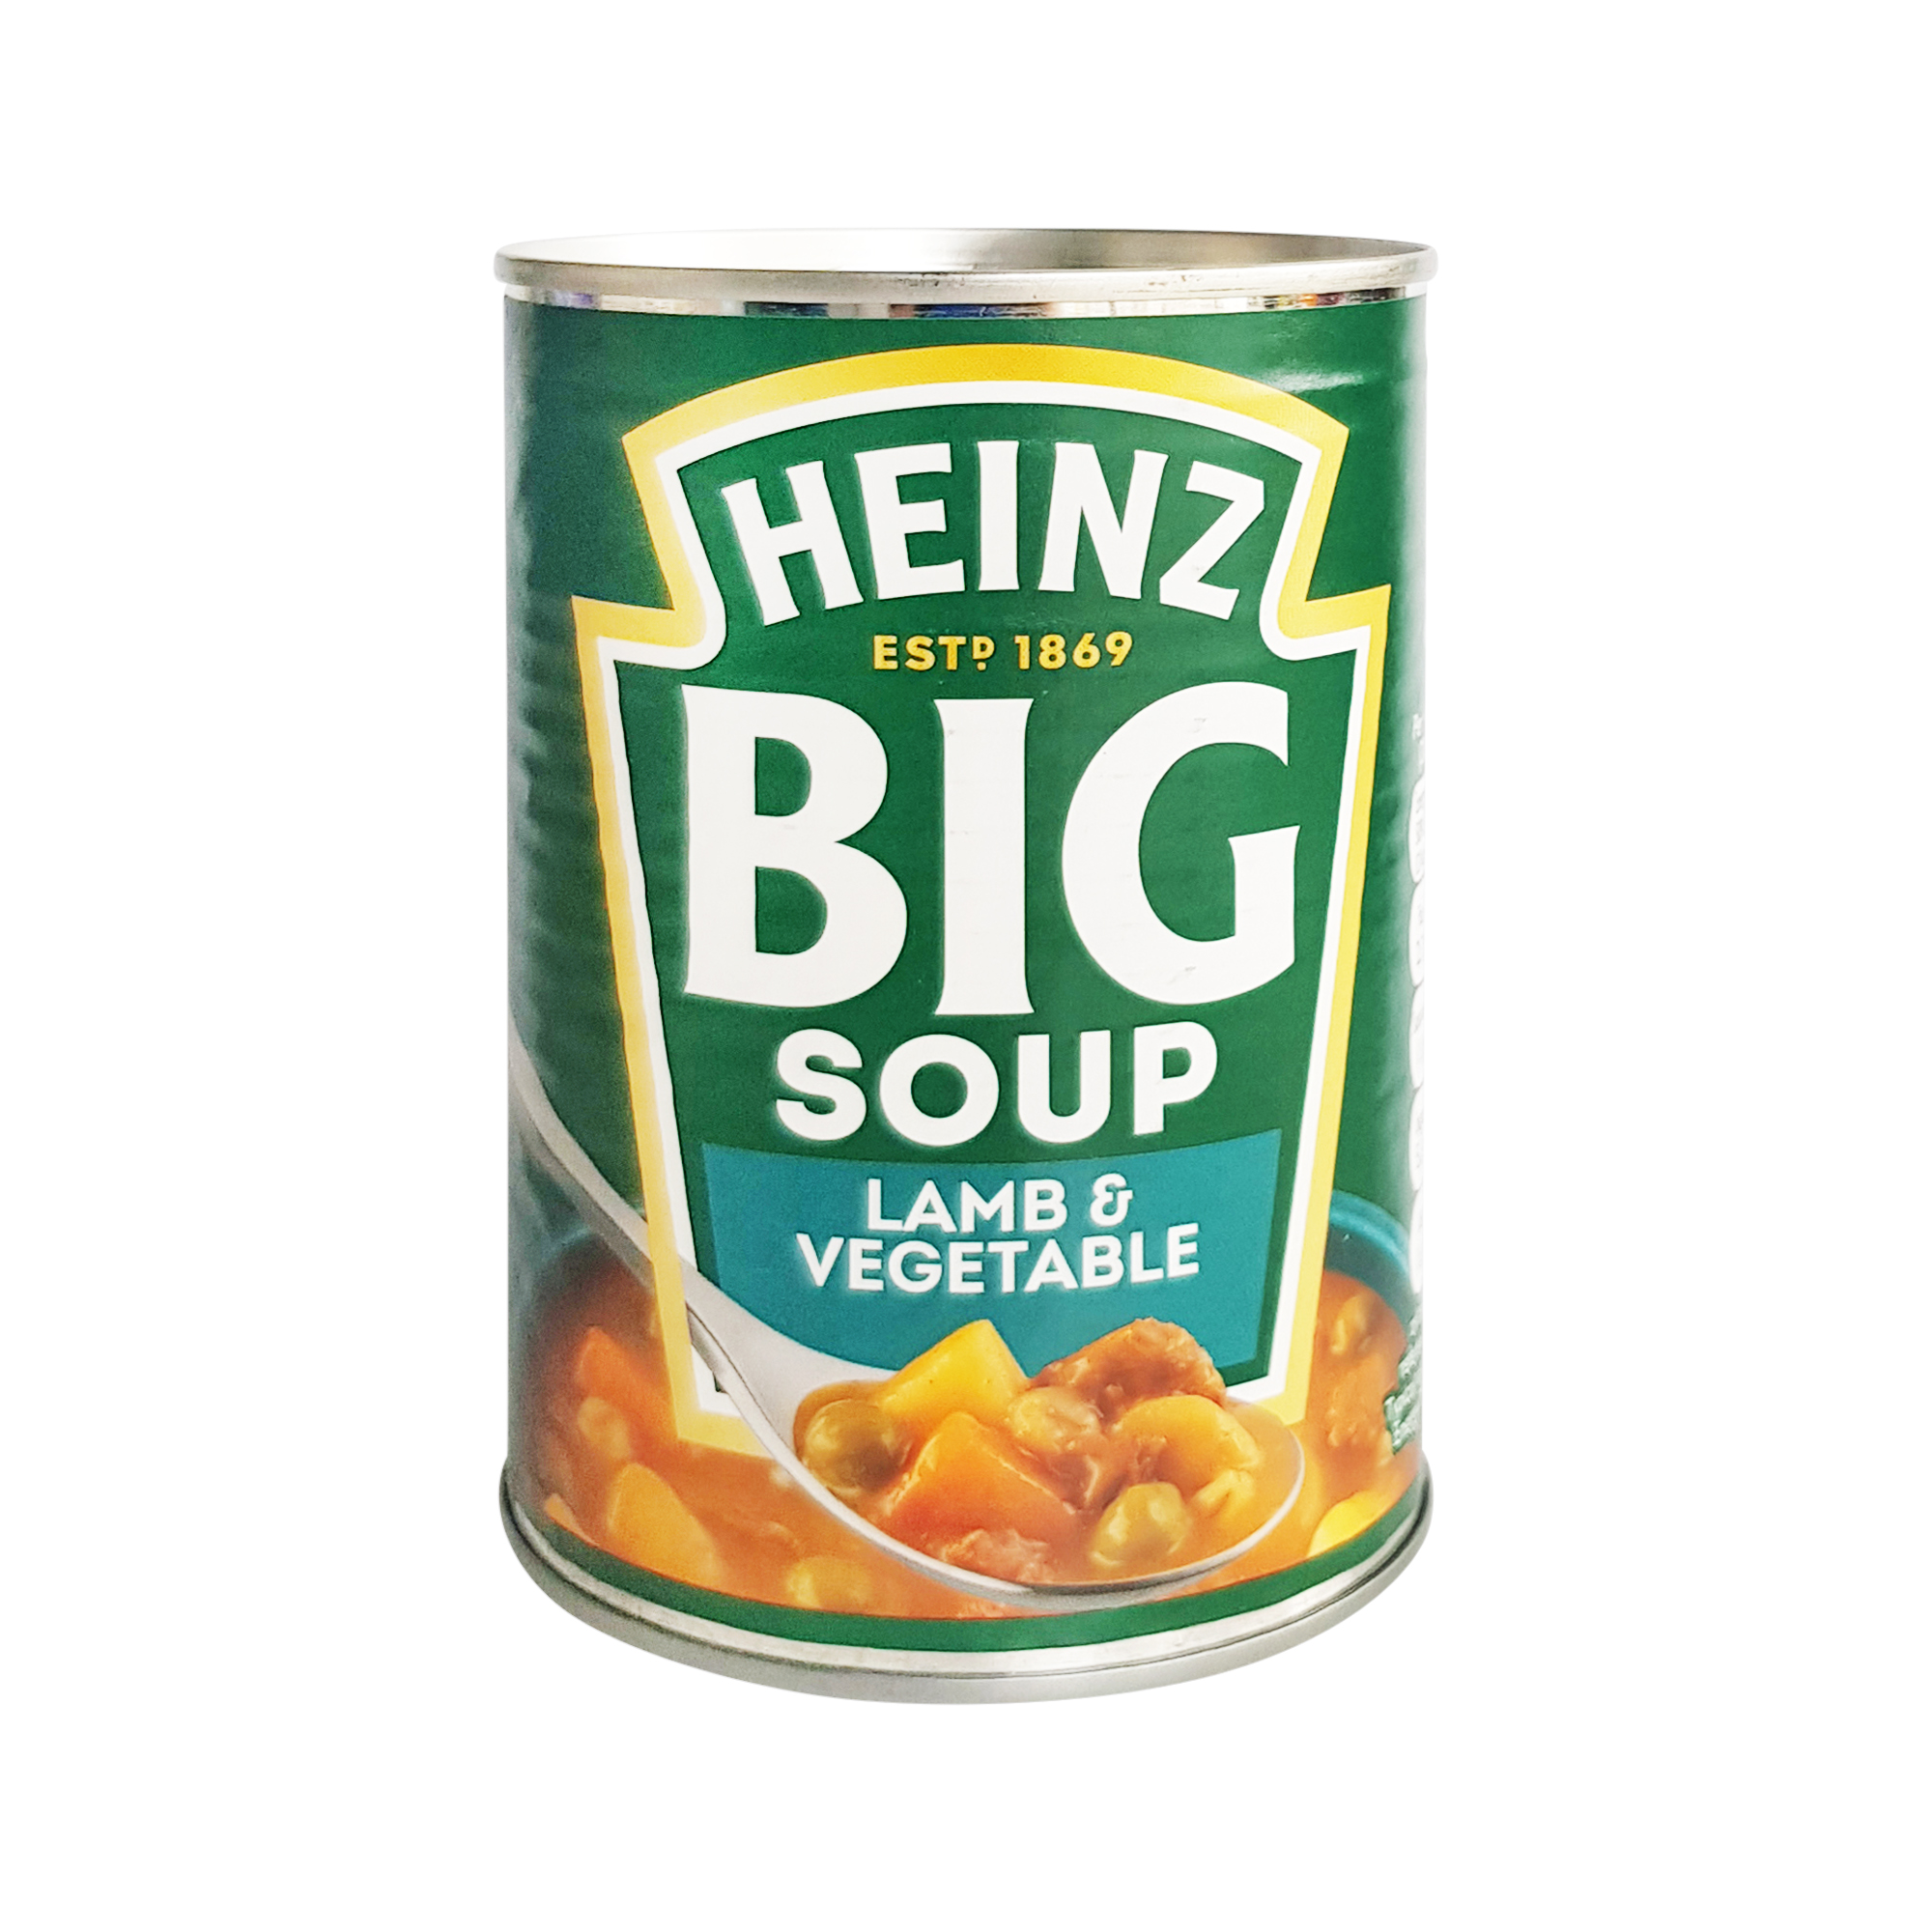 Heinz Big Soup Lamb & Vegetable (400g)